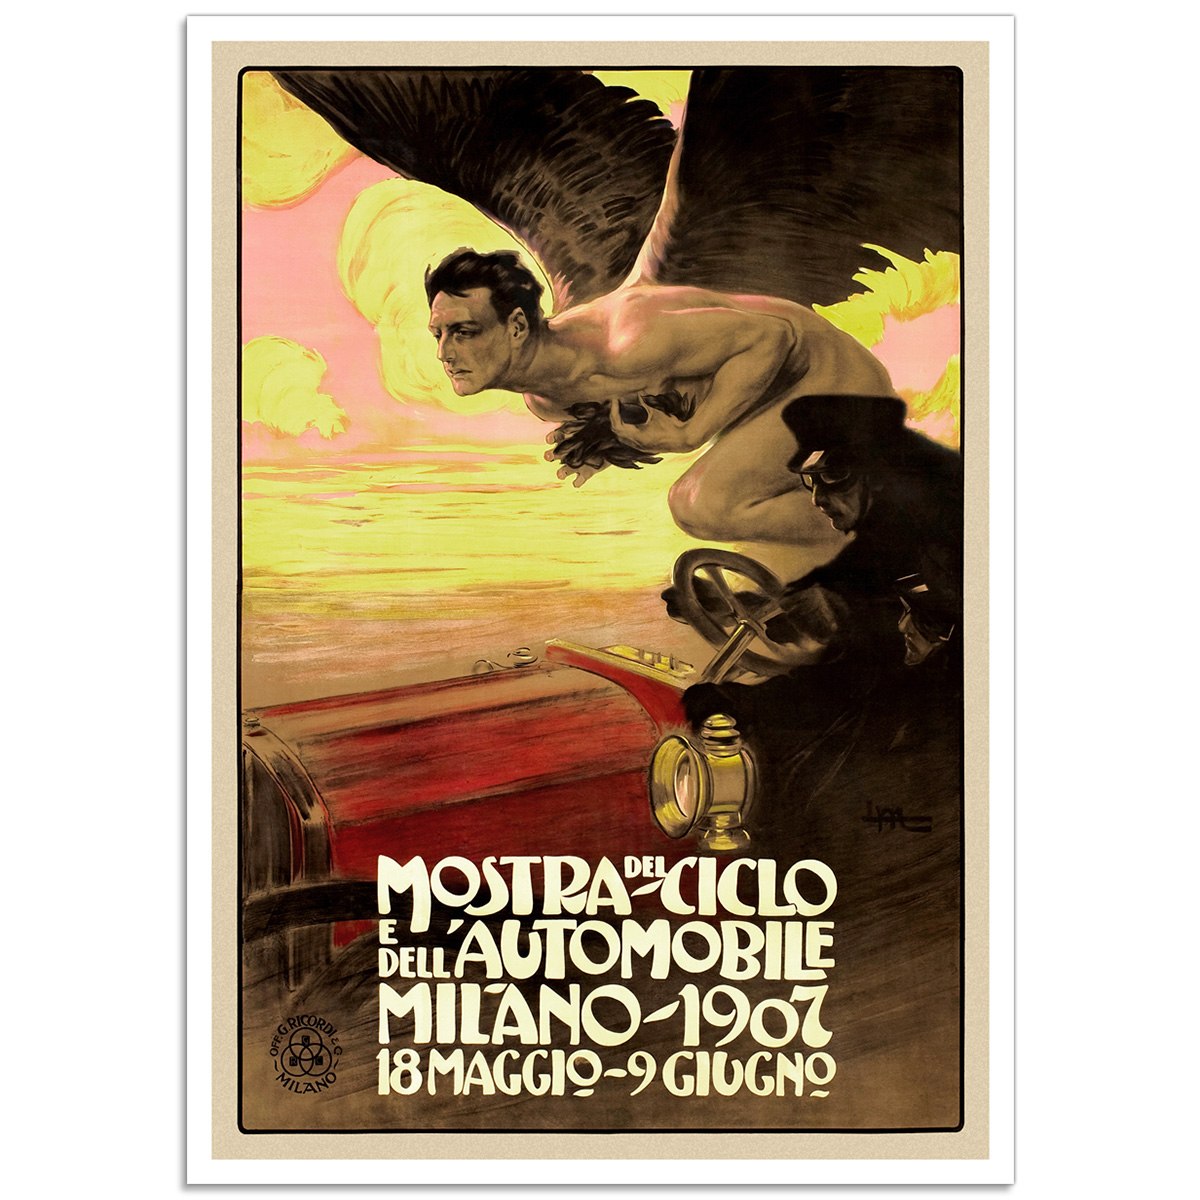 Vintage Italian Promotional Poster - Mostra Del Ciclo Dell'Automobile Milano